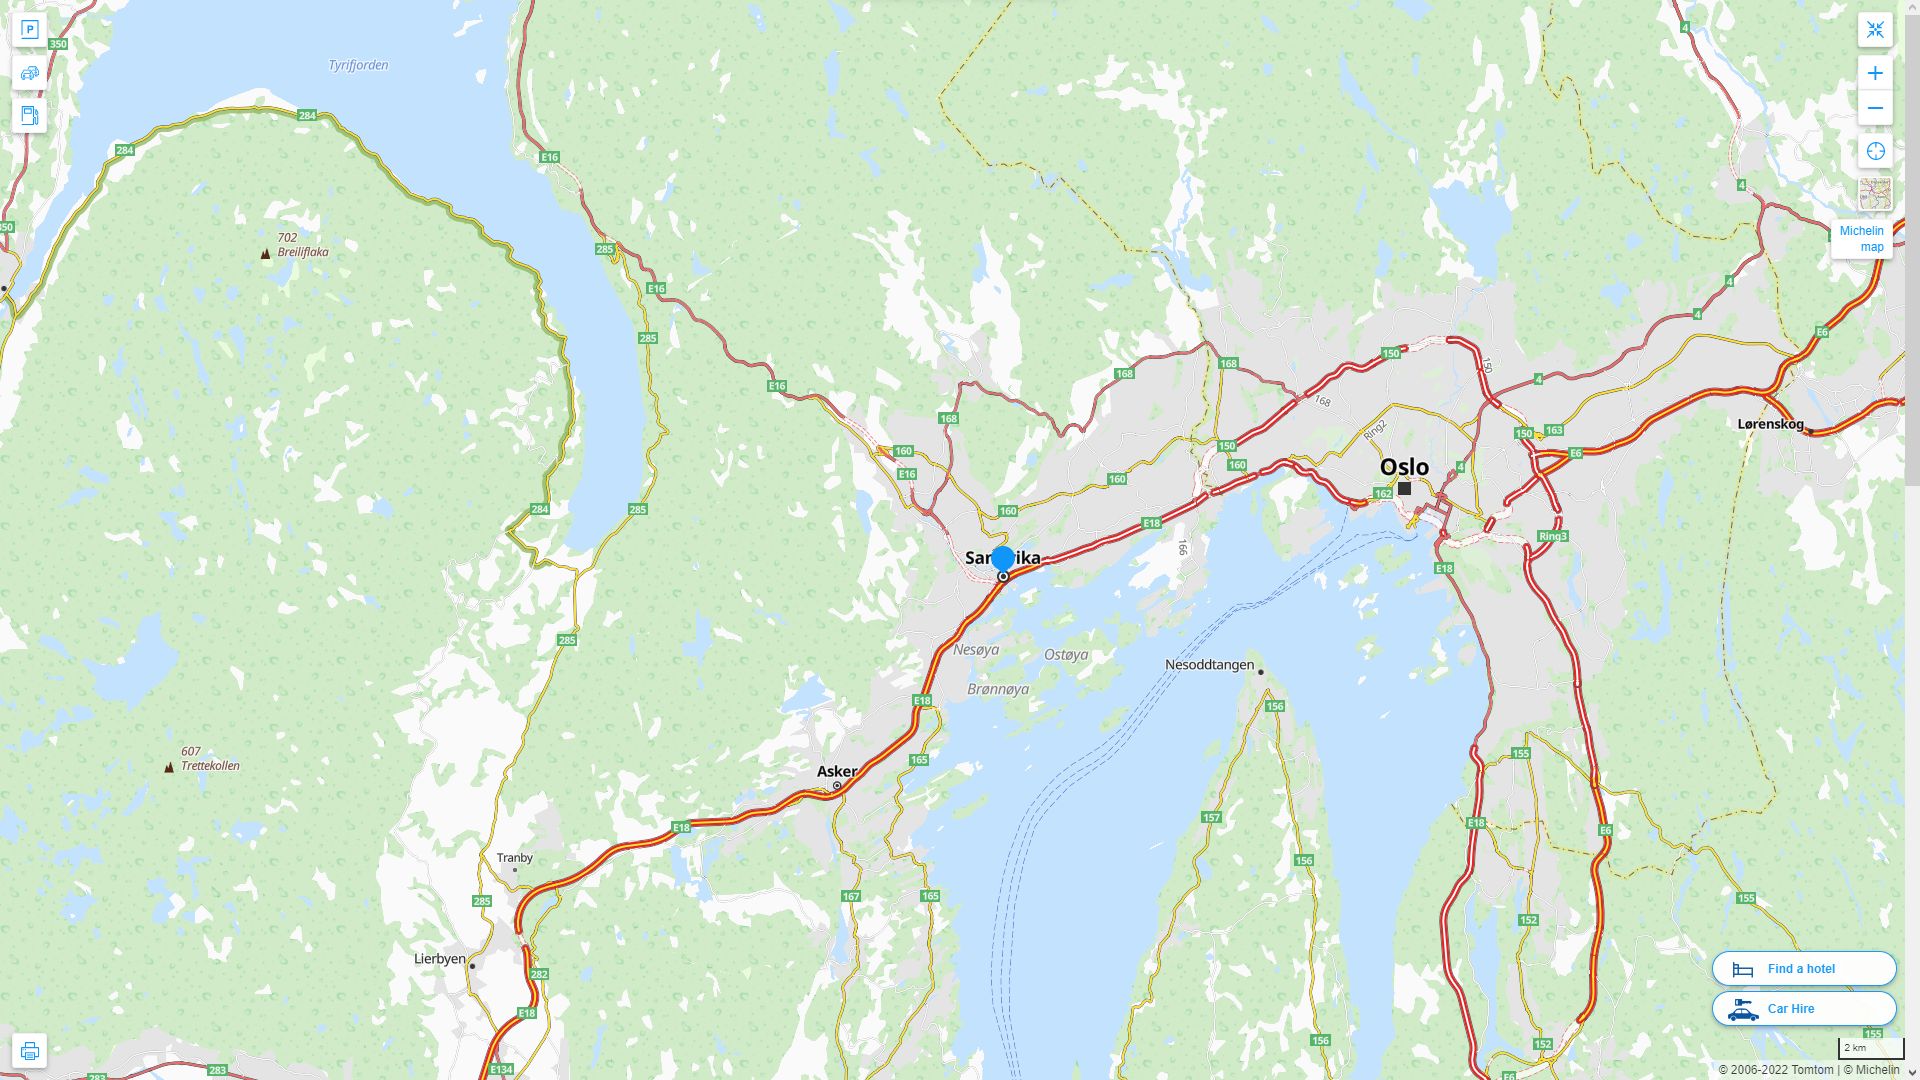 Baerum Norvege Autoroute et carte routiere